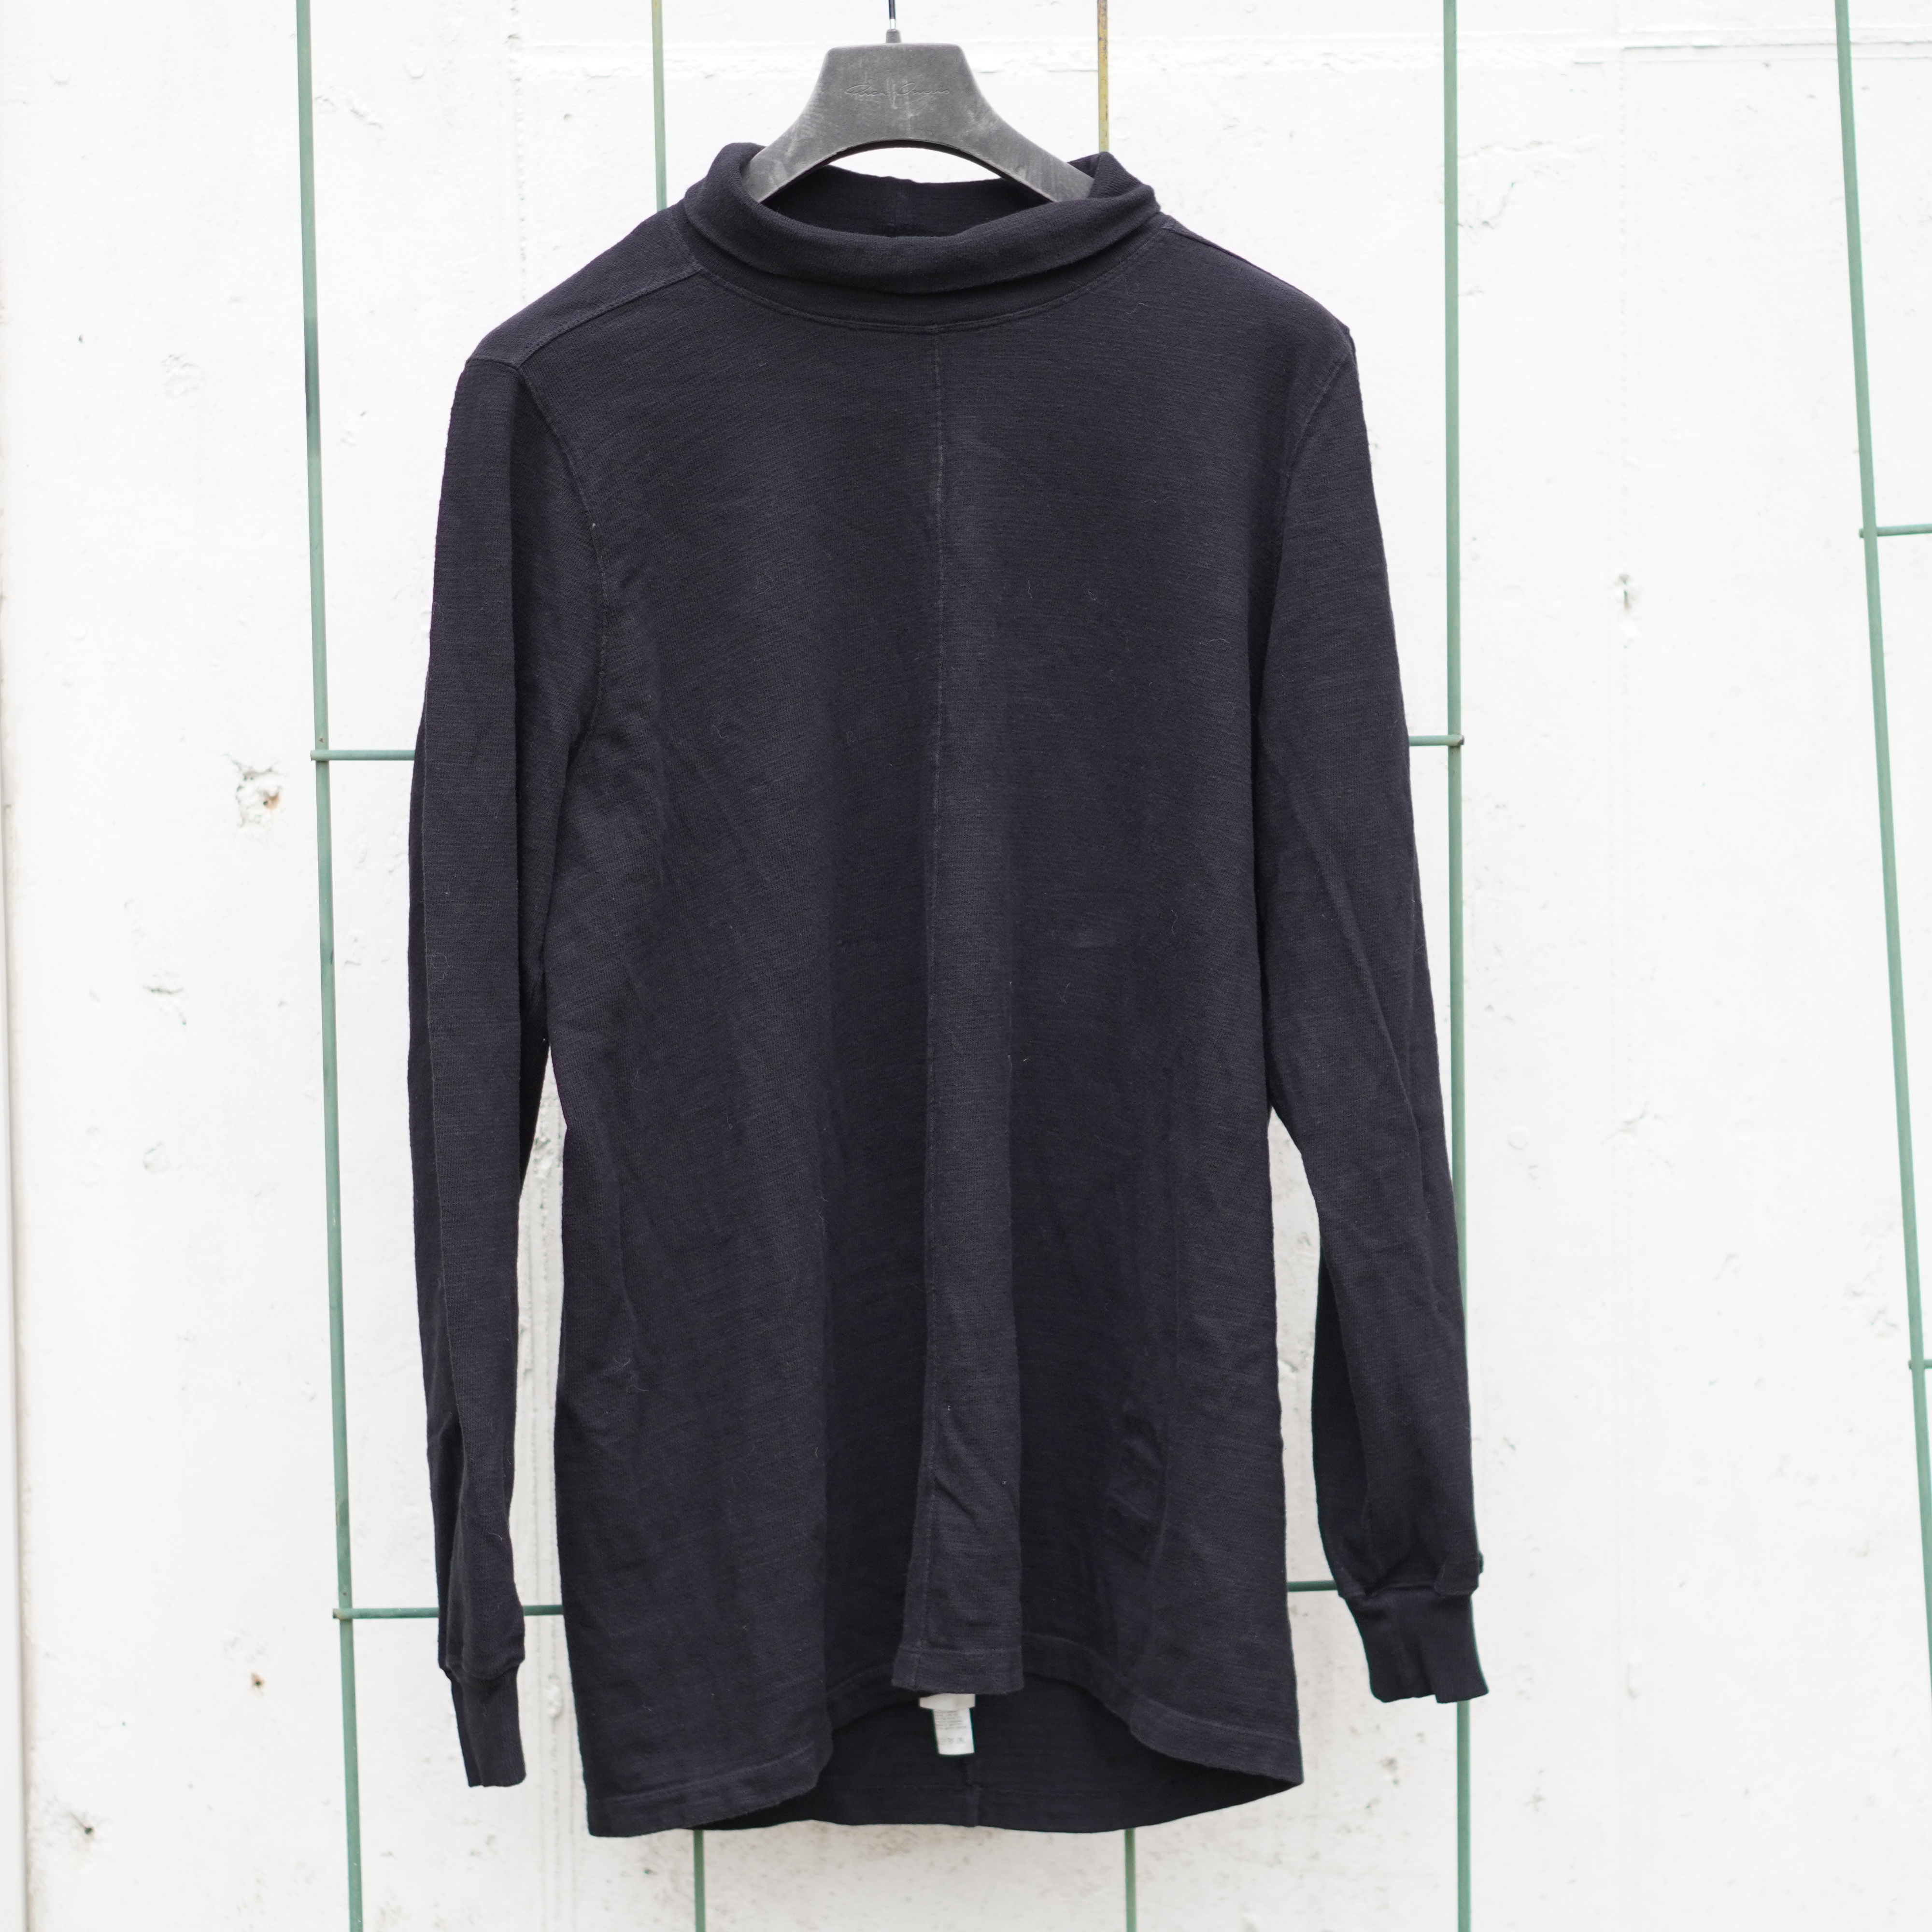 Rick Black Turtleneck Sweater Size Medium FW17 Glitter - 1